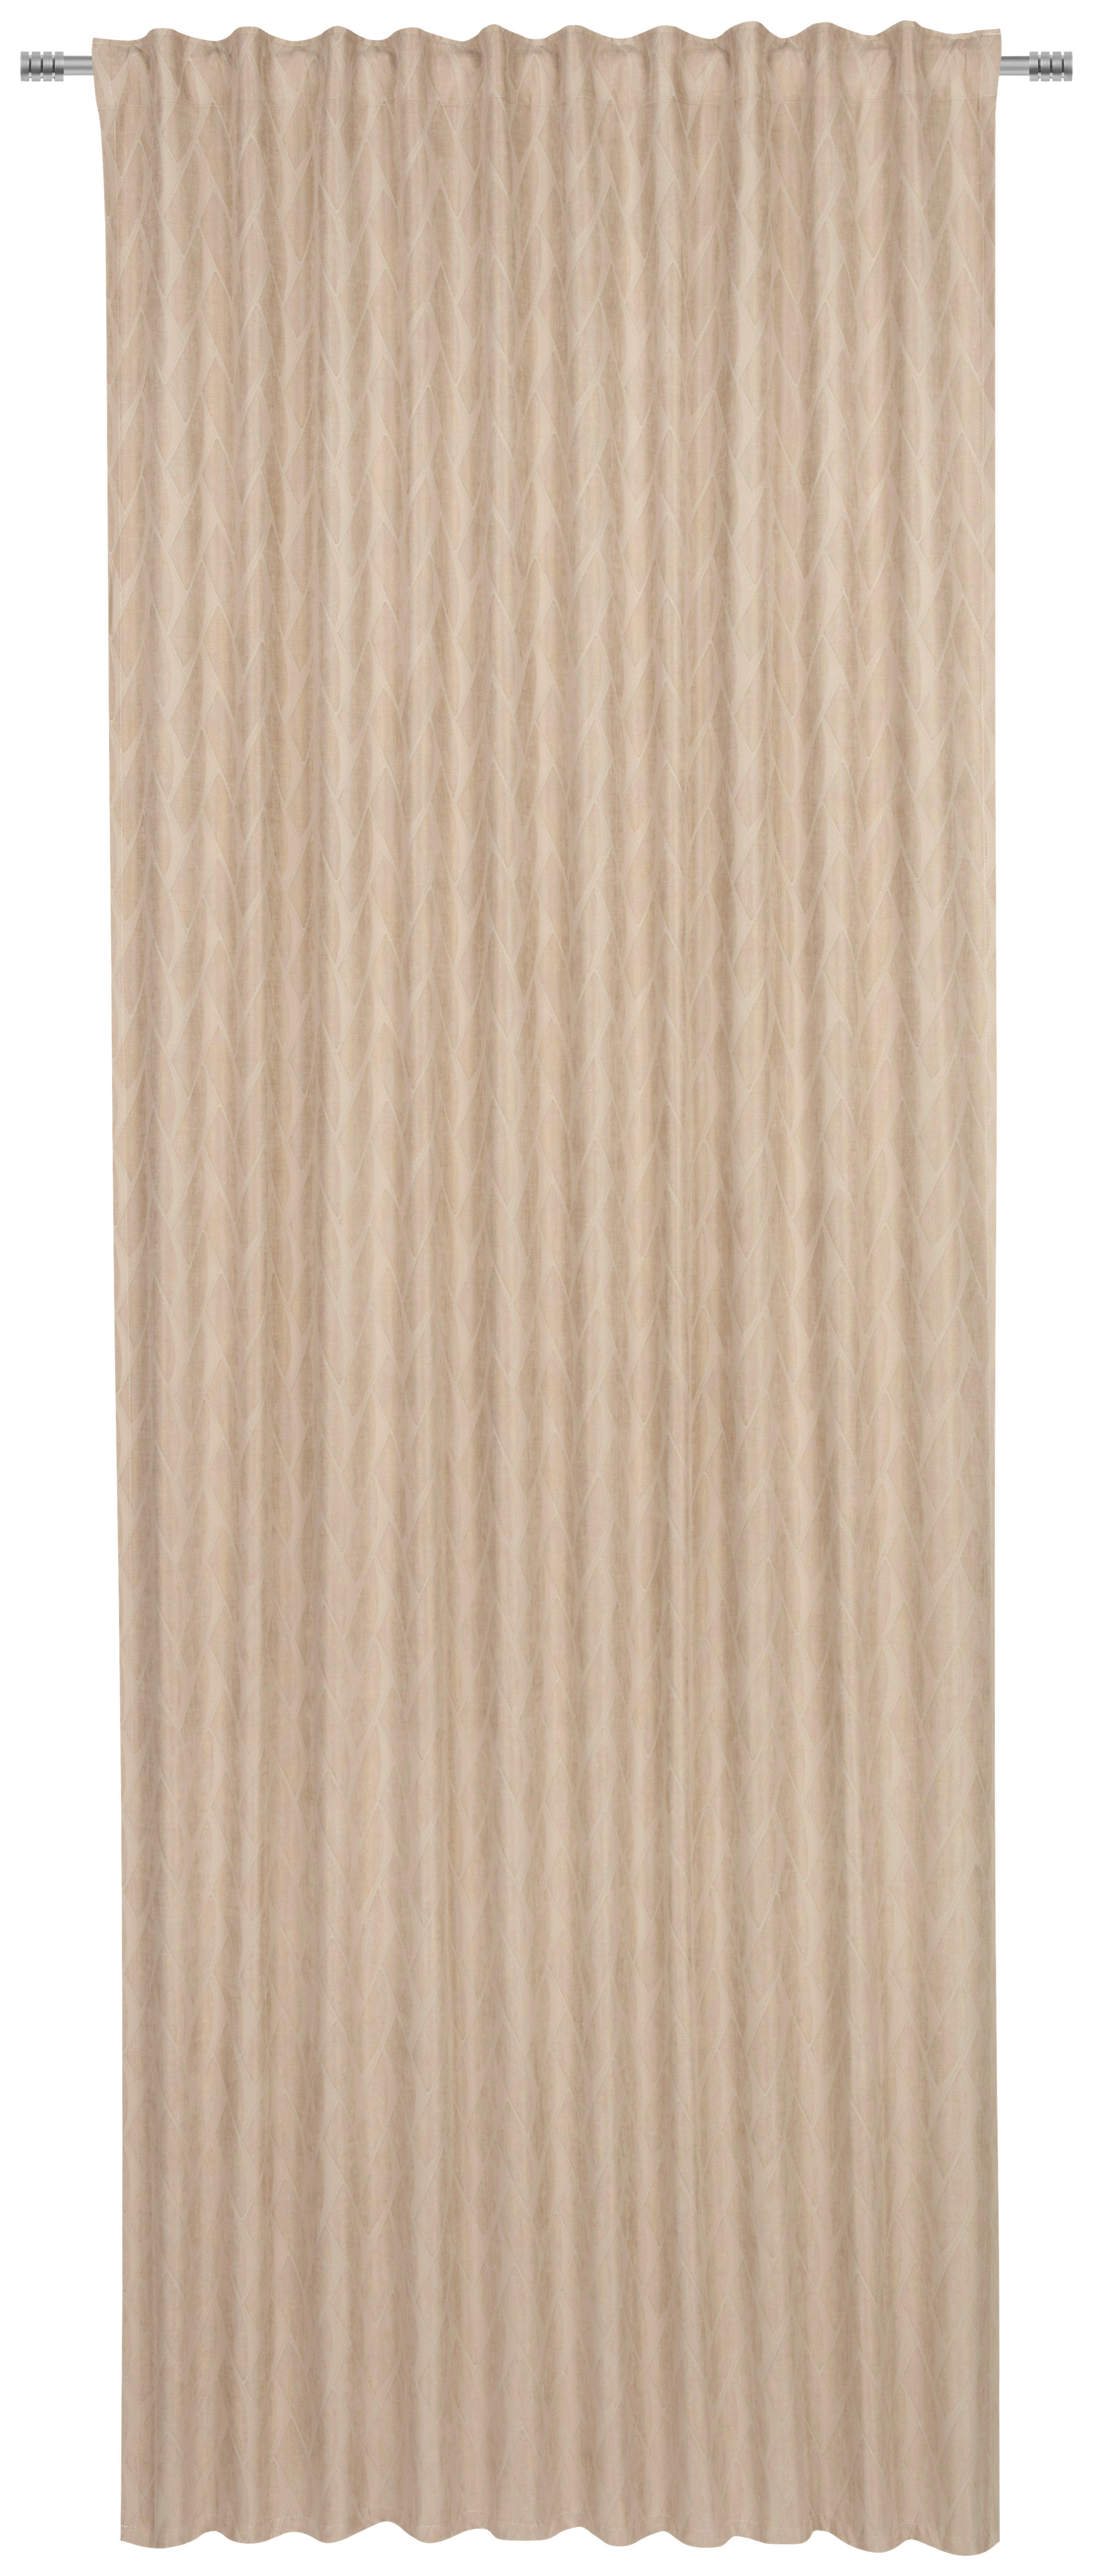 FERTIGVORHANG SOLO blickdicht 140/245 cm   - Beige, KONVENTIONELL, Textil (140/245cm) - Dieter Knoll